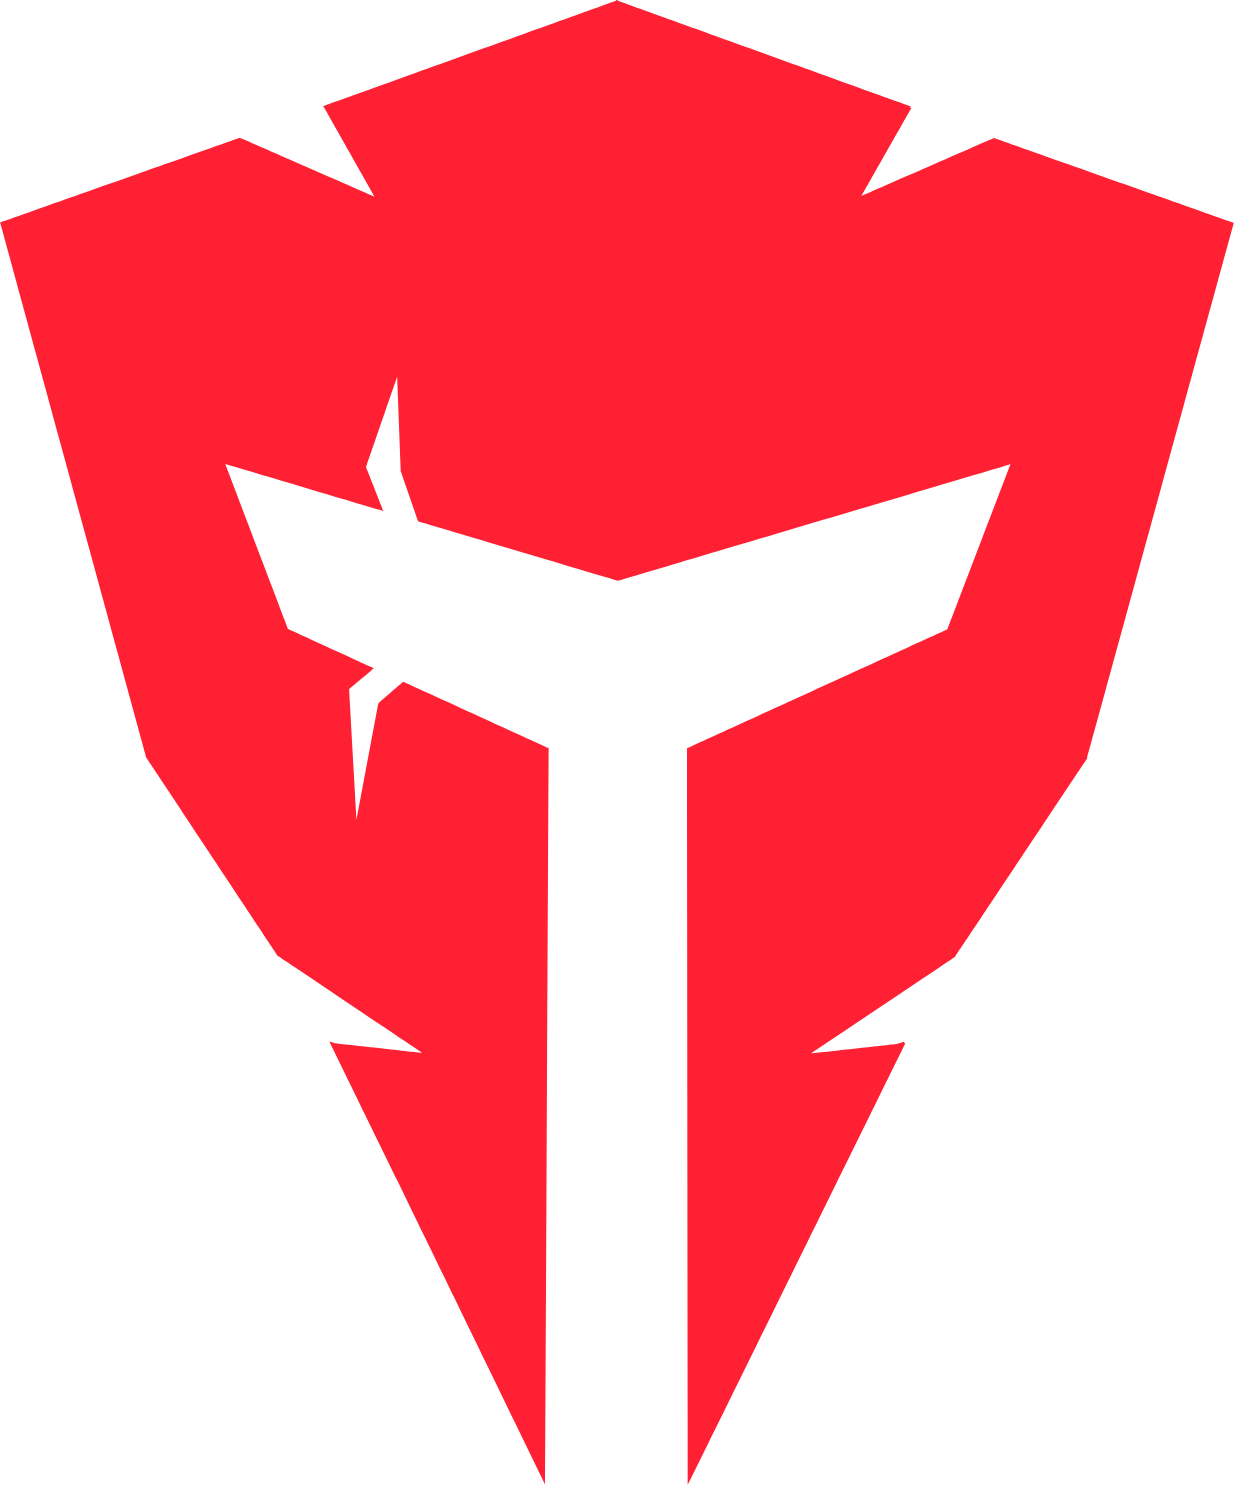 LeetDesk ist offizieller Sponsor des esports-Teams angry titans